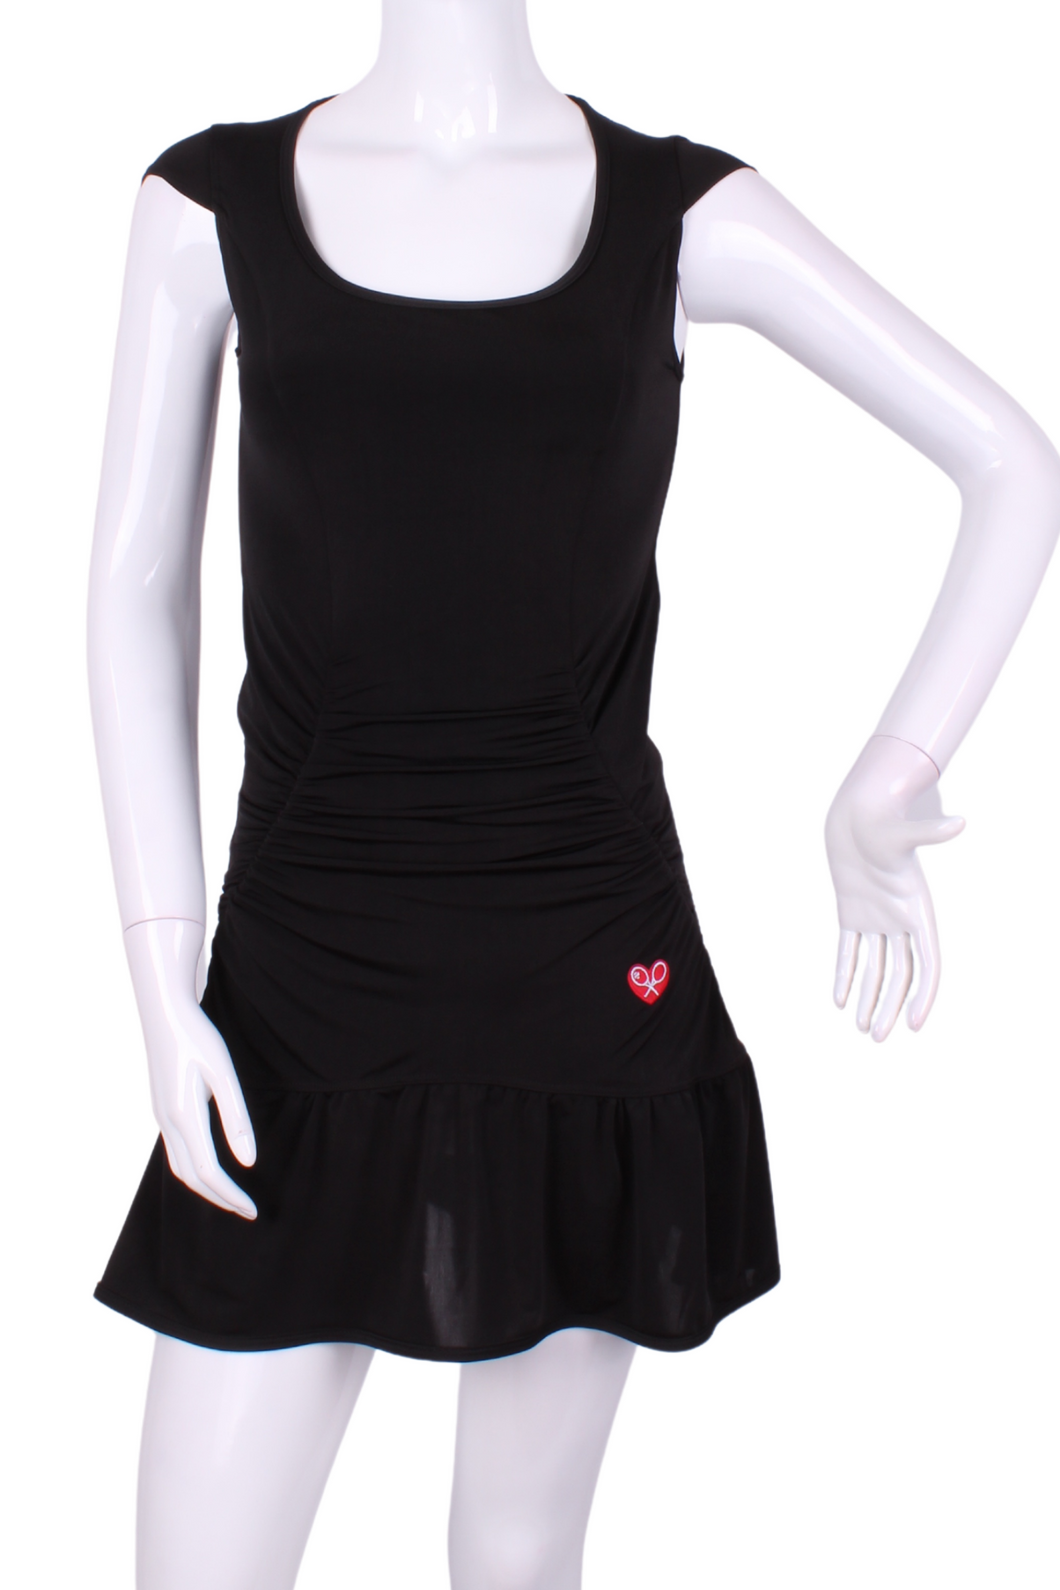 V1 Black Monroe Tennis Dress NO Ruching - I LOVE MY DOUBLES PARTNER!!!